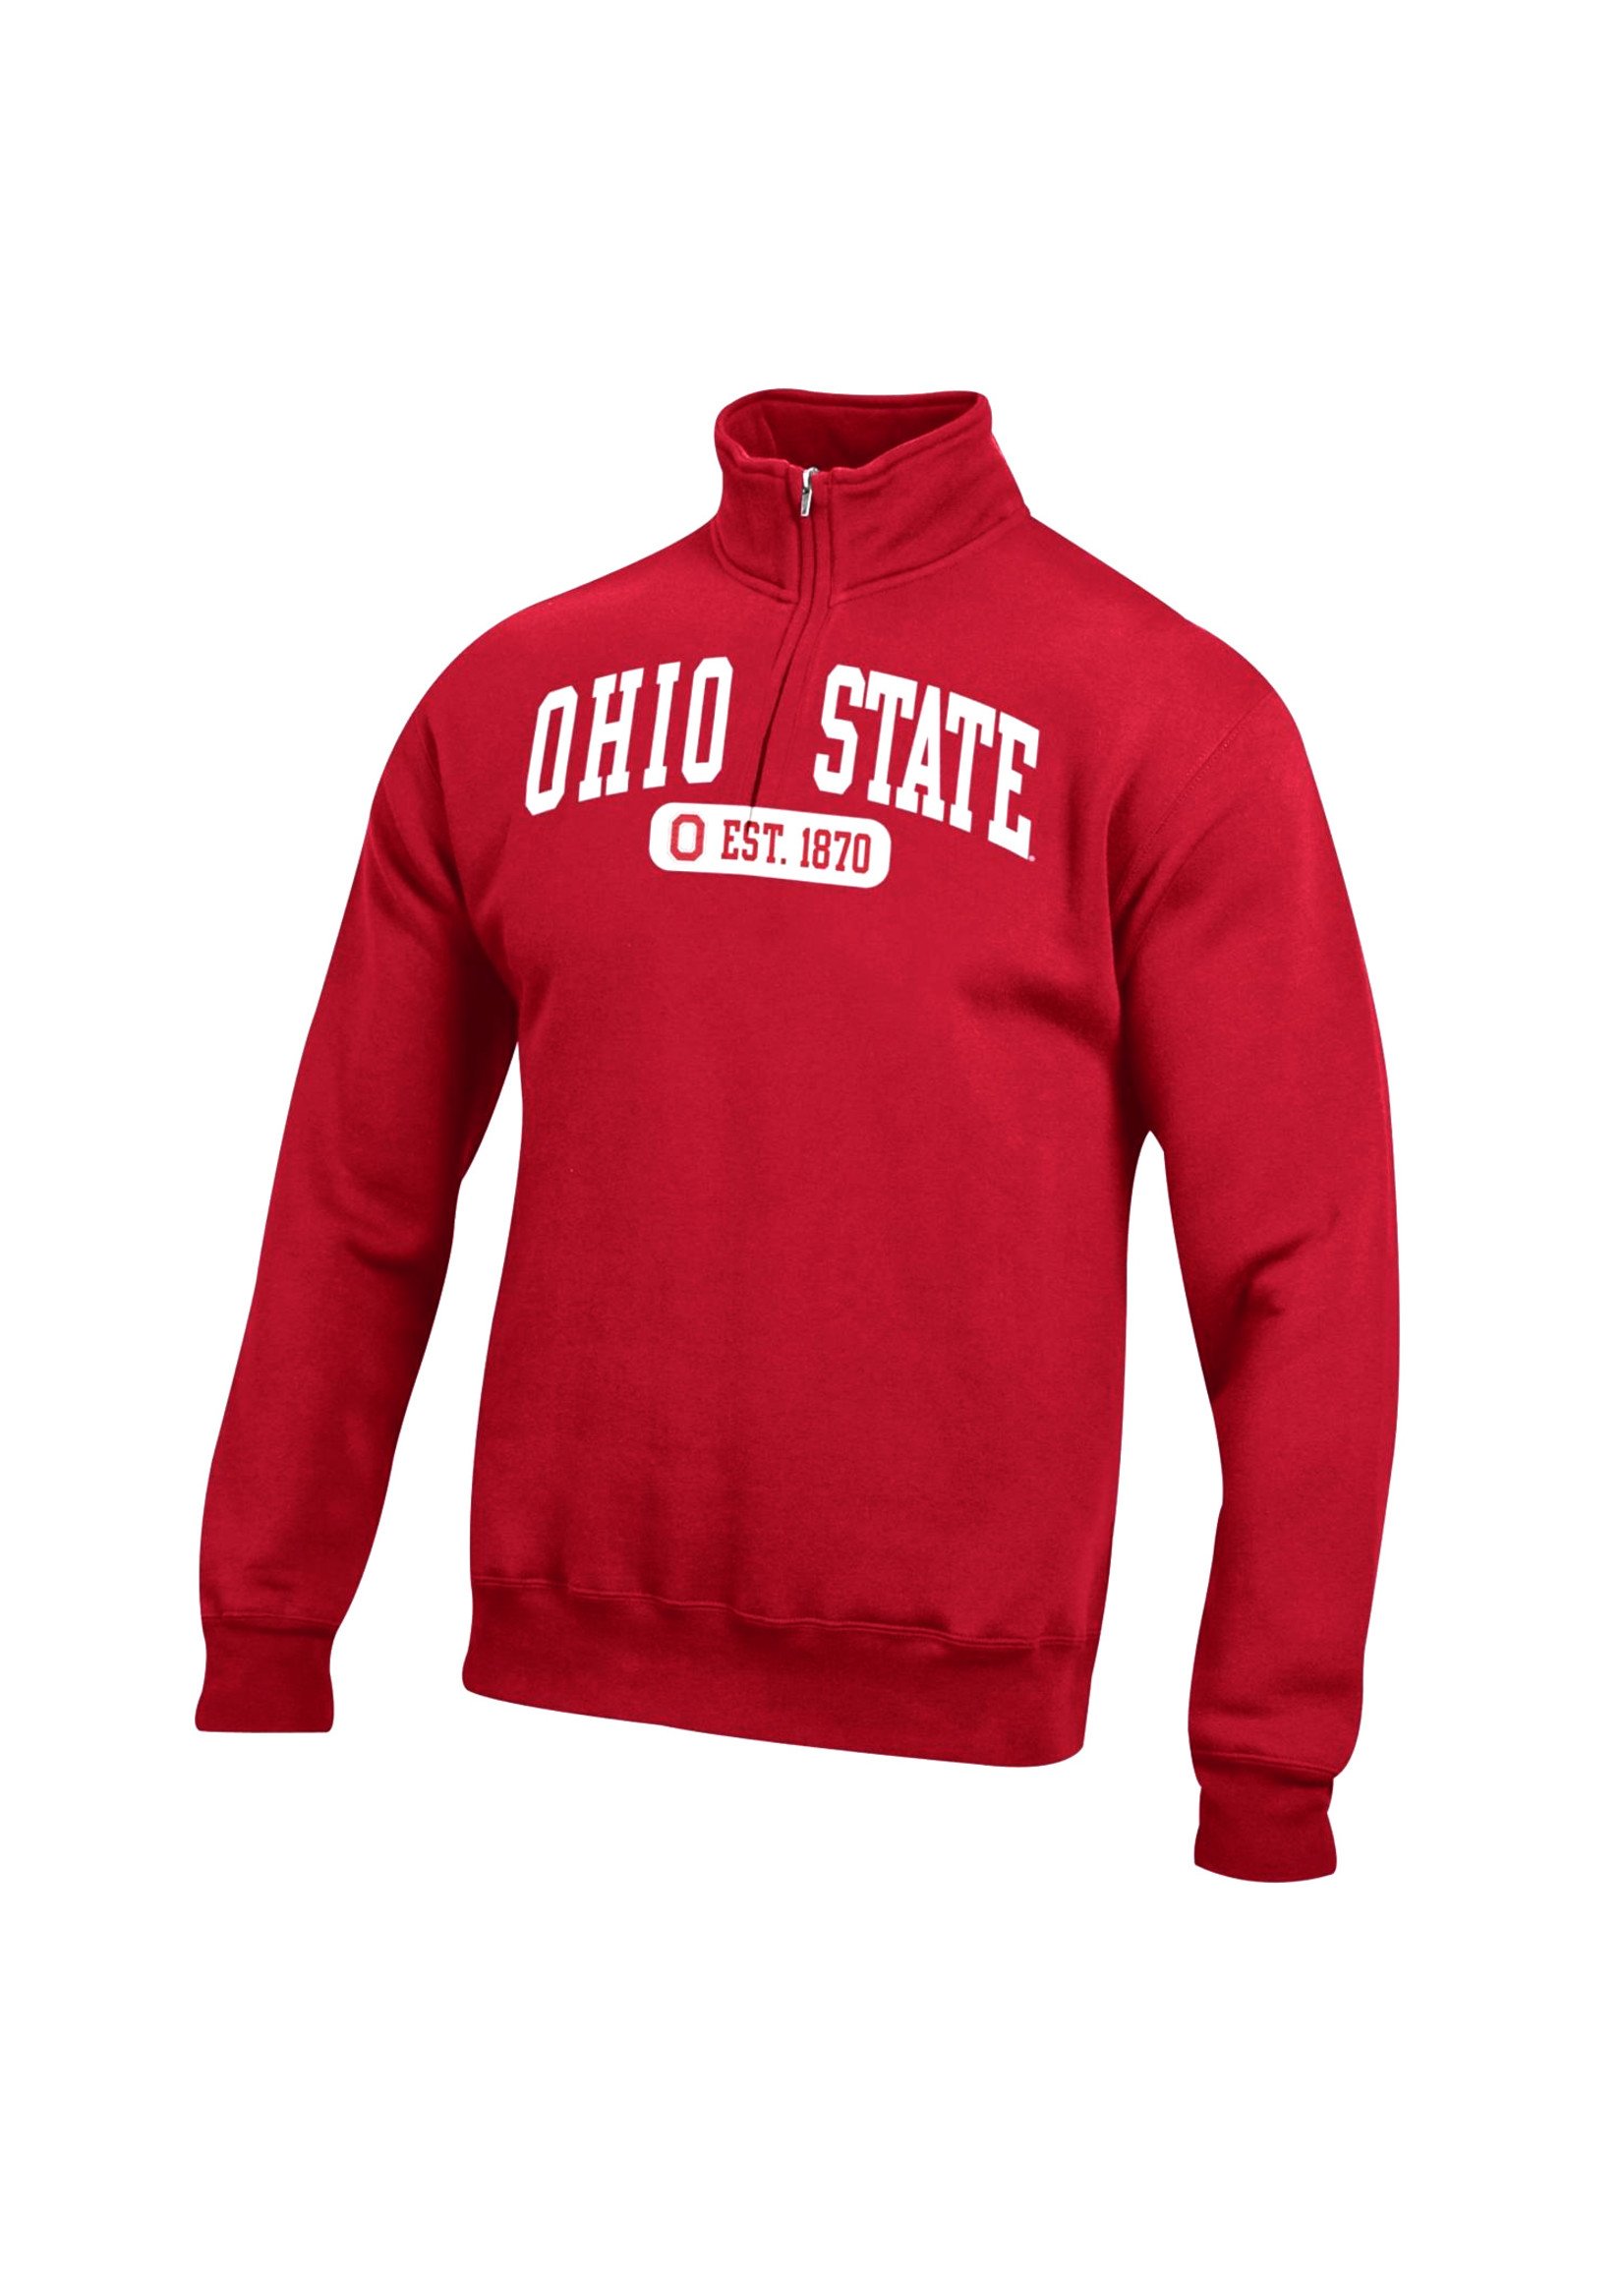 Gear Sports Ohio State Buckeyes Est. 1870 Quarter Zip Sweatshirt